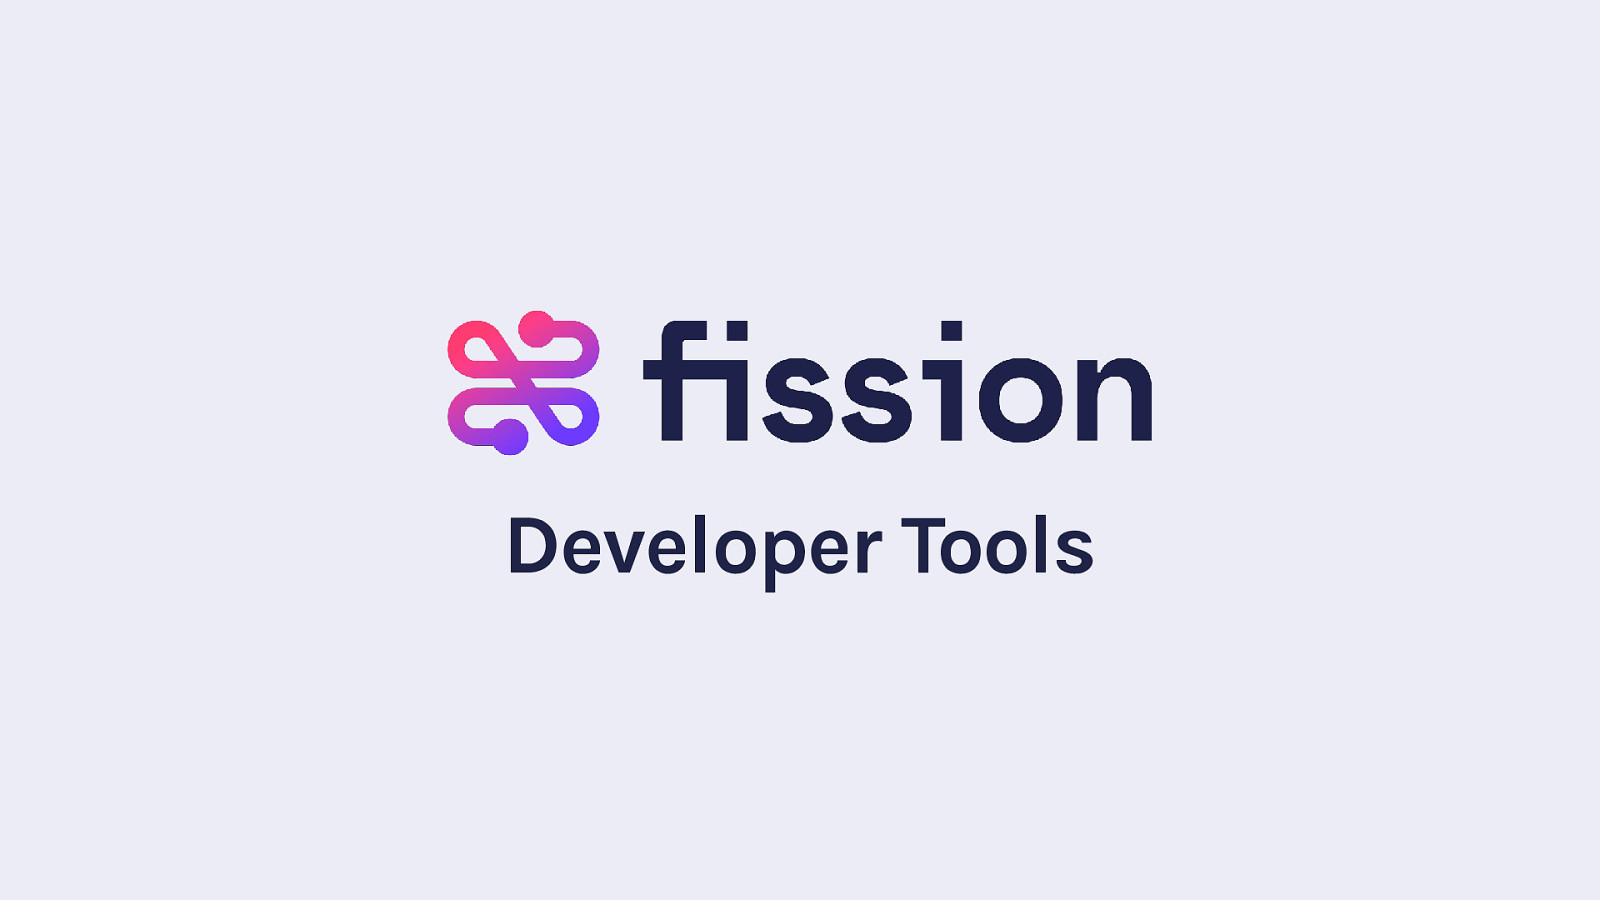 Fission Developer Tools